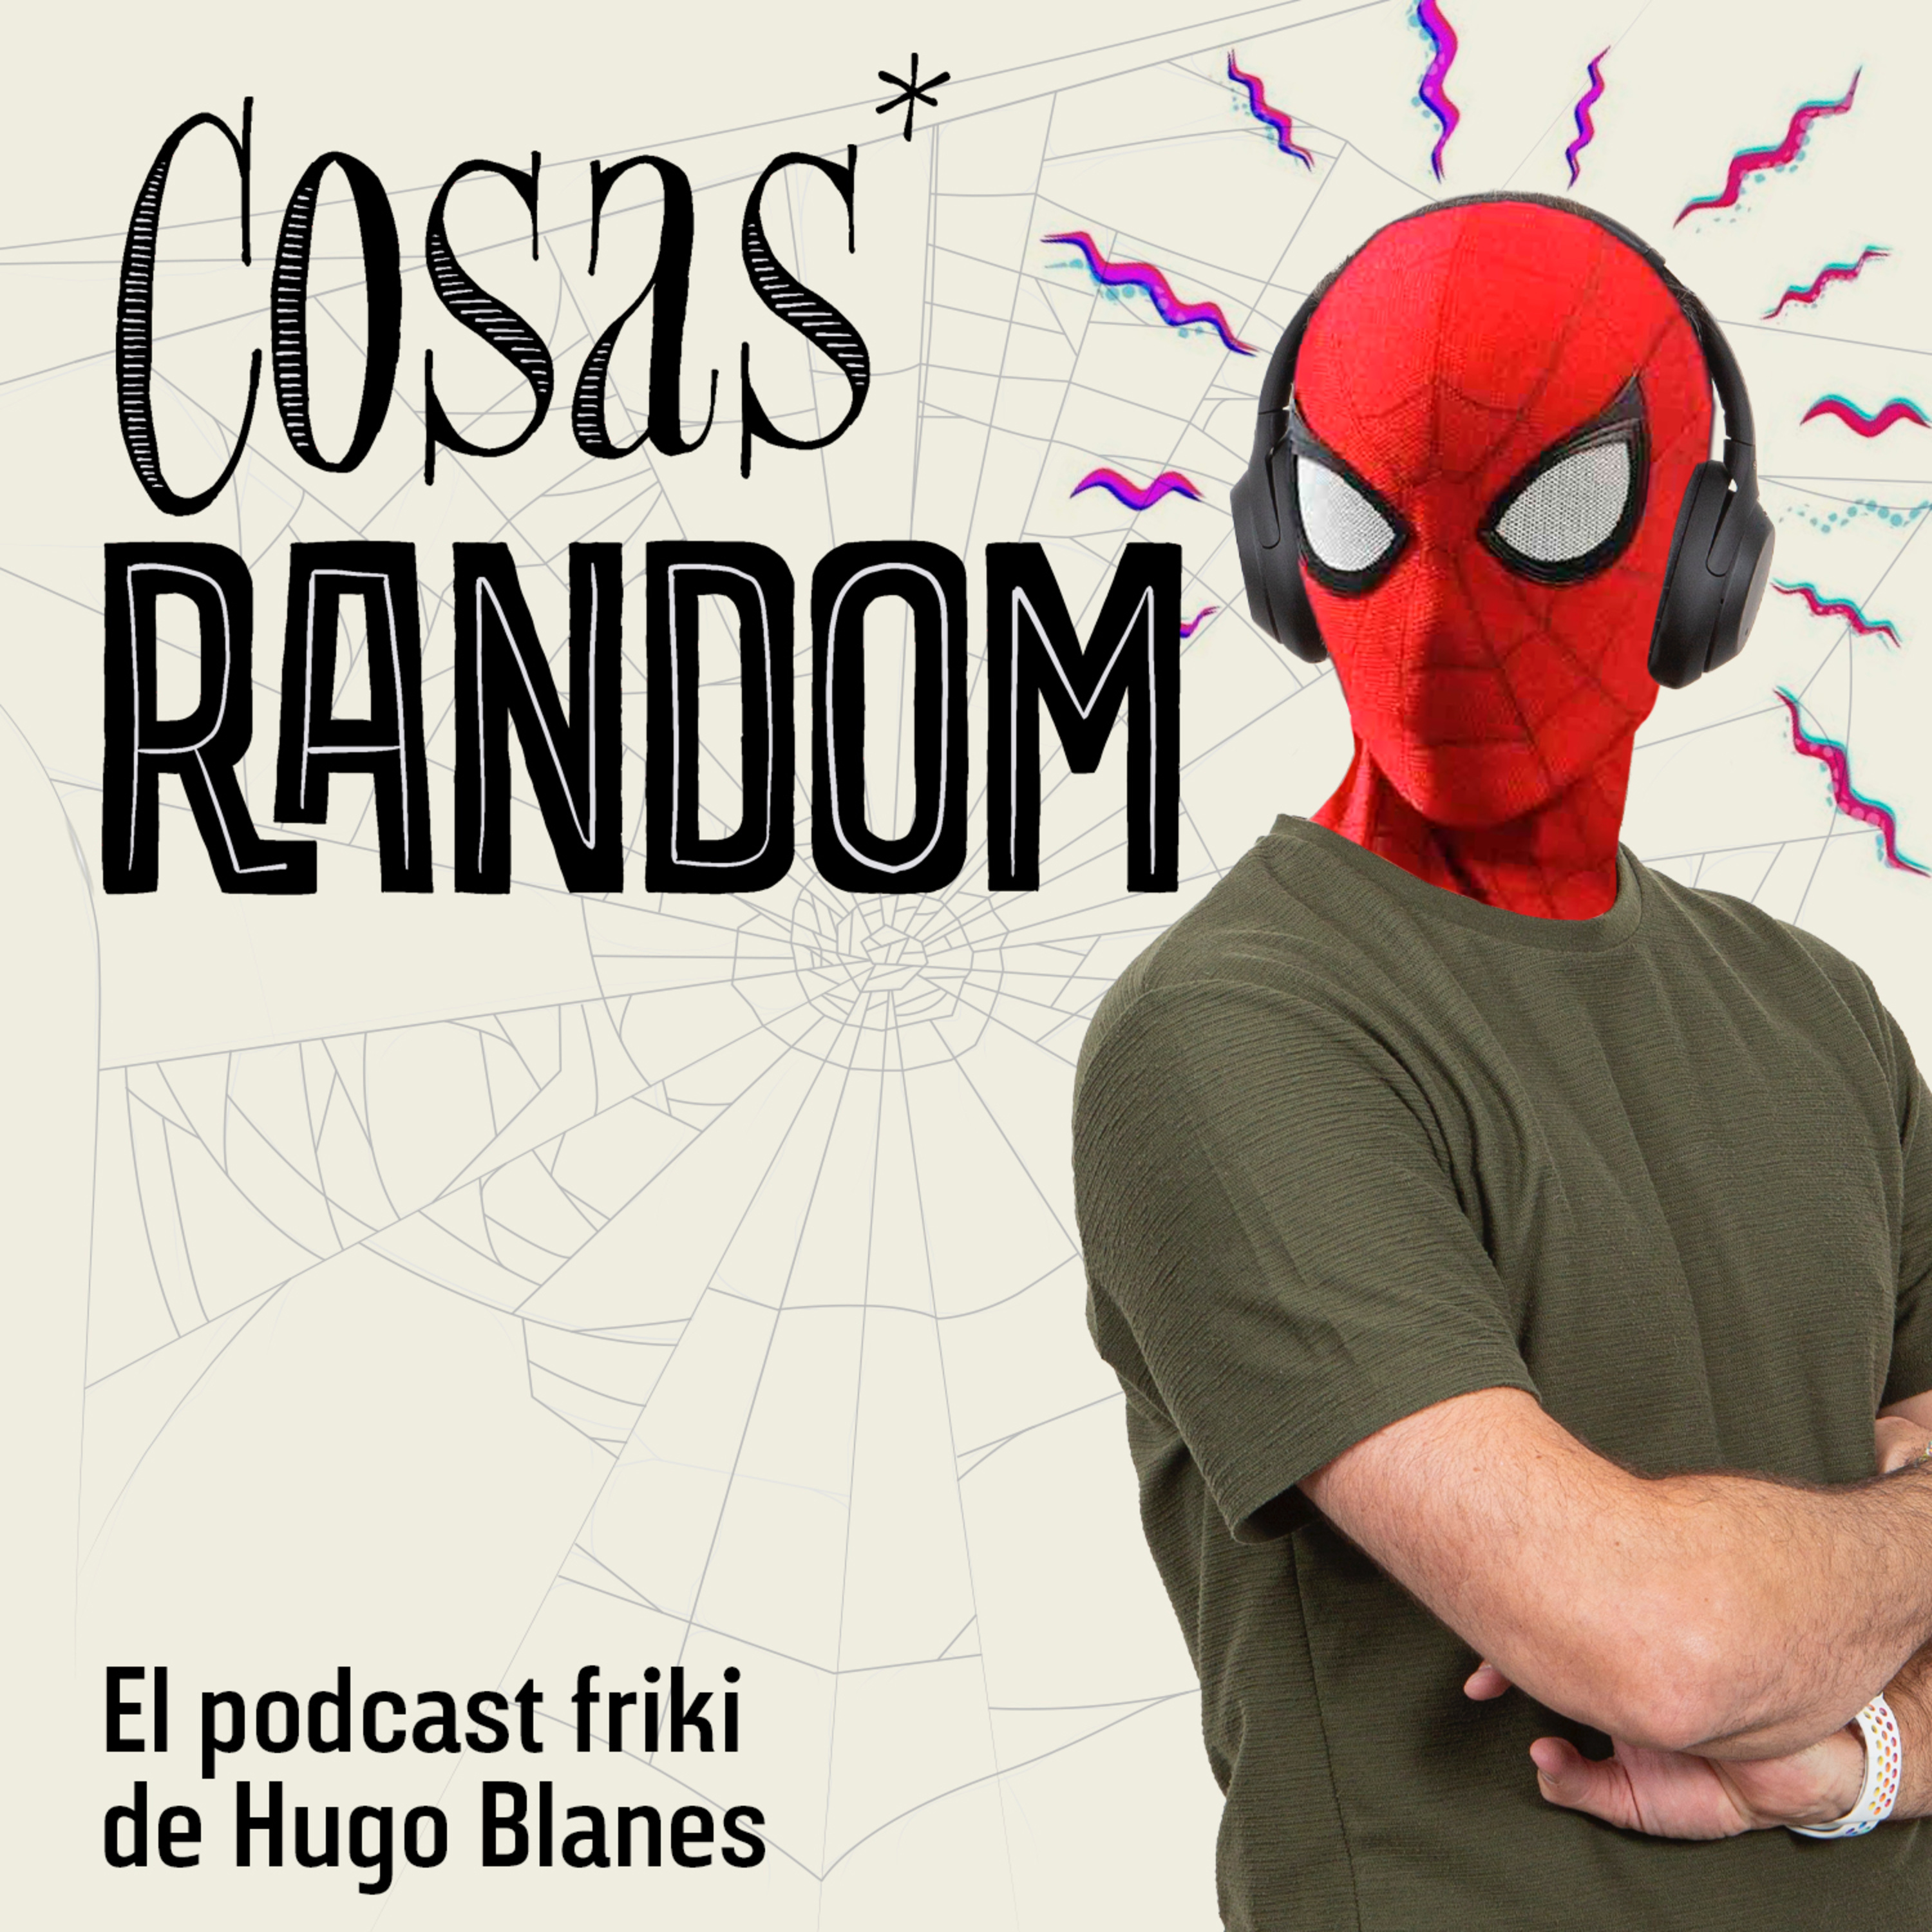 Cosas Random (podcast) - Cosas Random